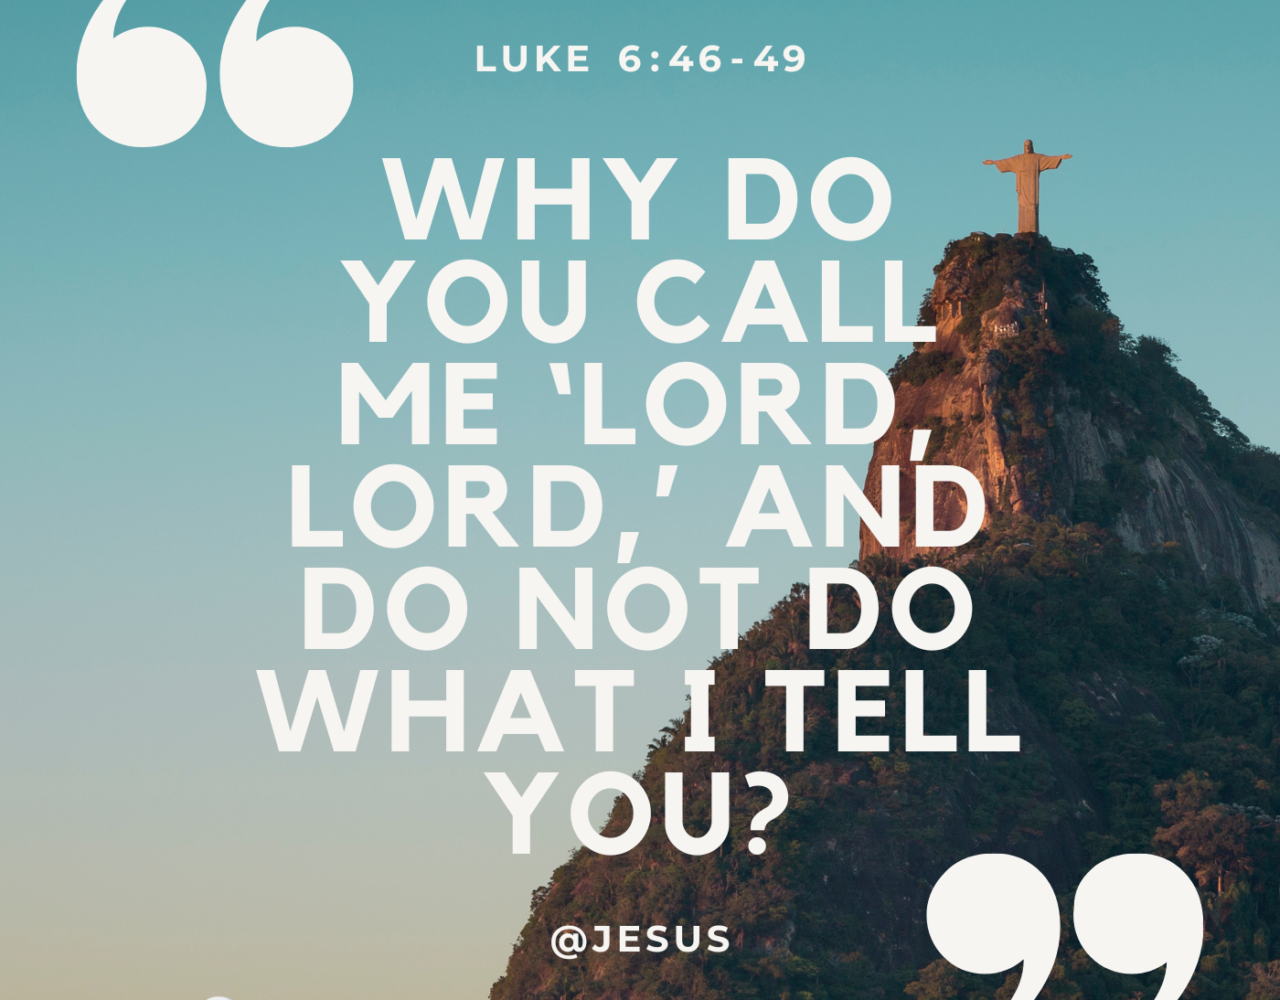 ‭‭Today’s Passage: ‭‭‭‭‭‭‭‭‭‭‭‭‭‭‭‭‭‭‭‭‭‭‭‭‭‭‭‭‭‭‭‭‭‭‭‭‭‭‭‭‭‭‭‭‭‭‭‭‭‭‭‭‭‭‭‭‭‭‭‭‭‭‭‭‭‭‭‭‭‭‭‭‭‭‭‭Luke‬ ‭6‬:‭46‬-‭49‬ ‭NRSV‬‬